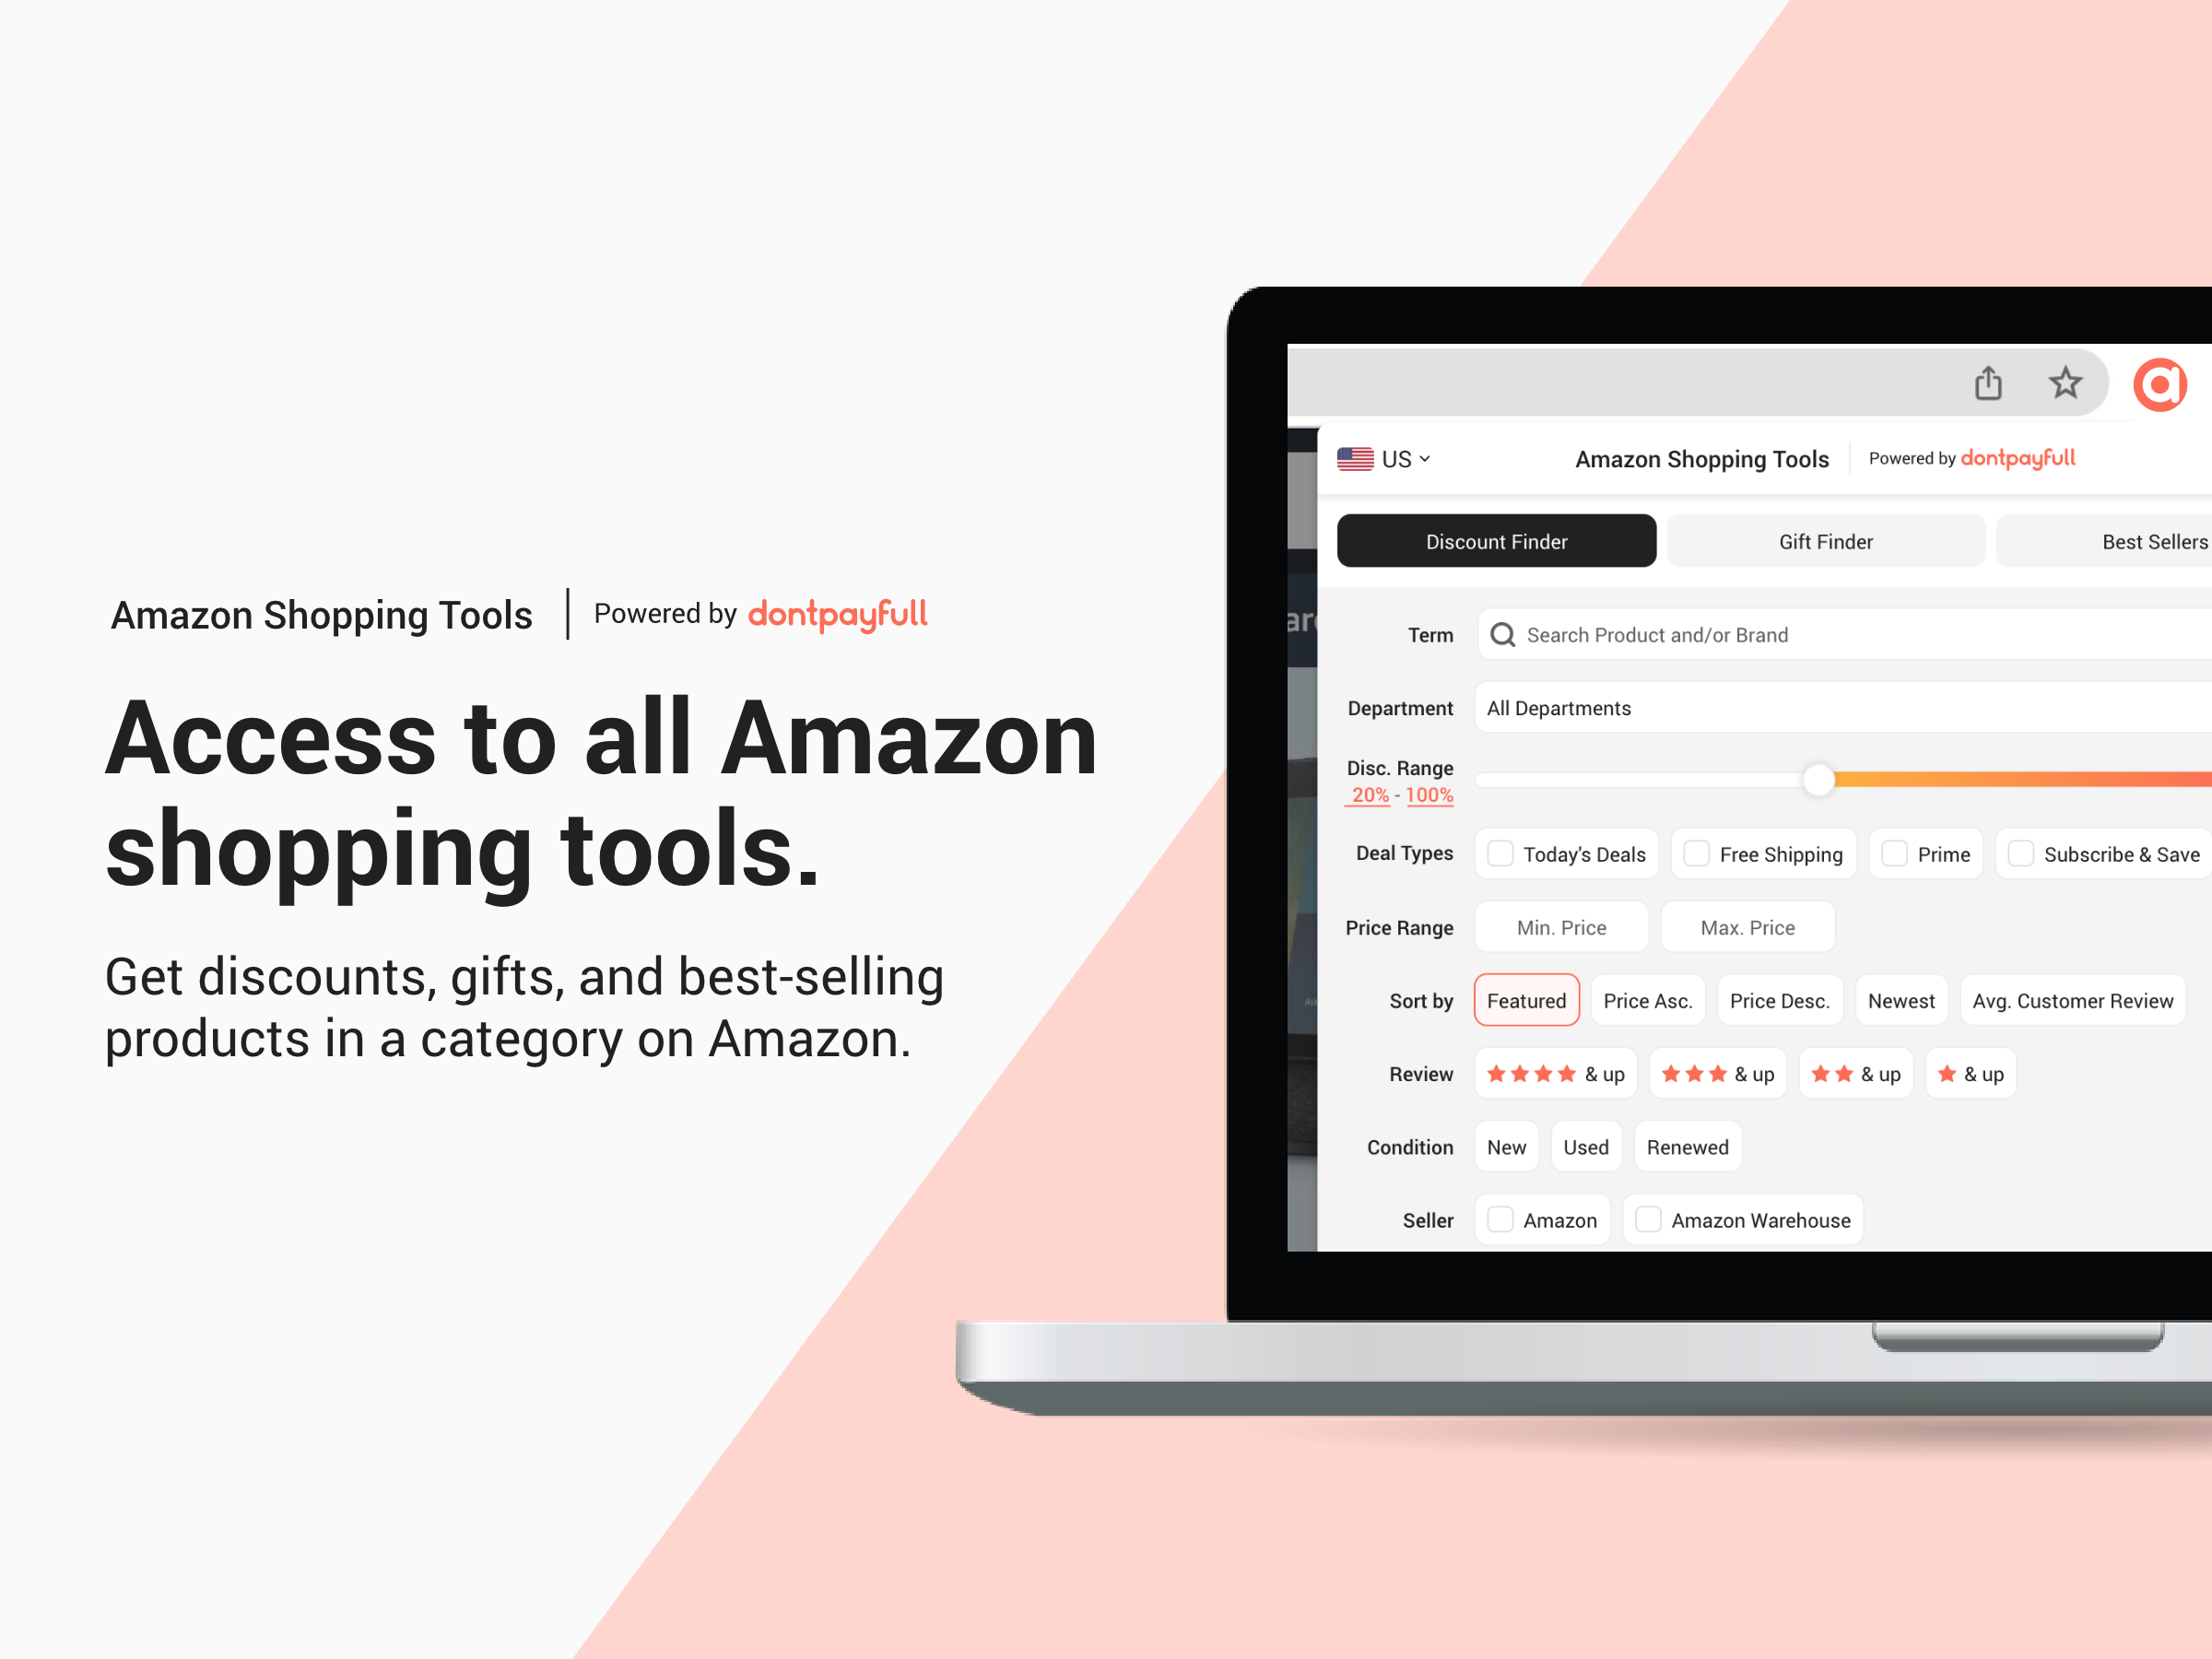 Amazon Shopping Tools